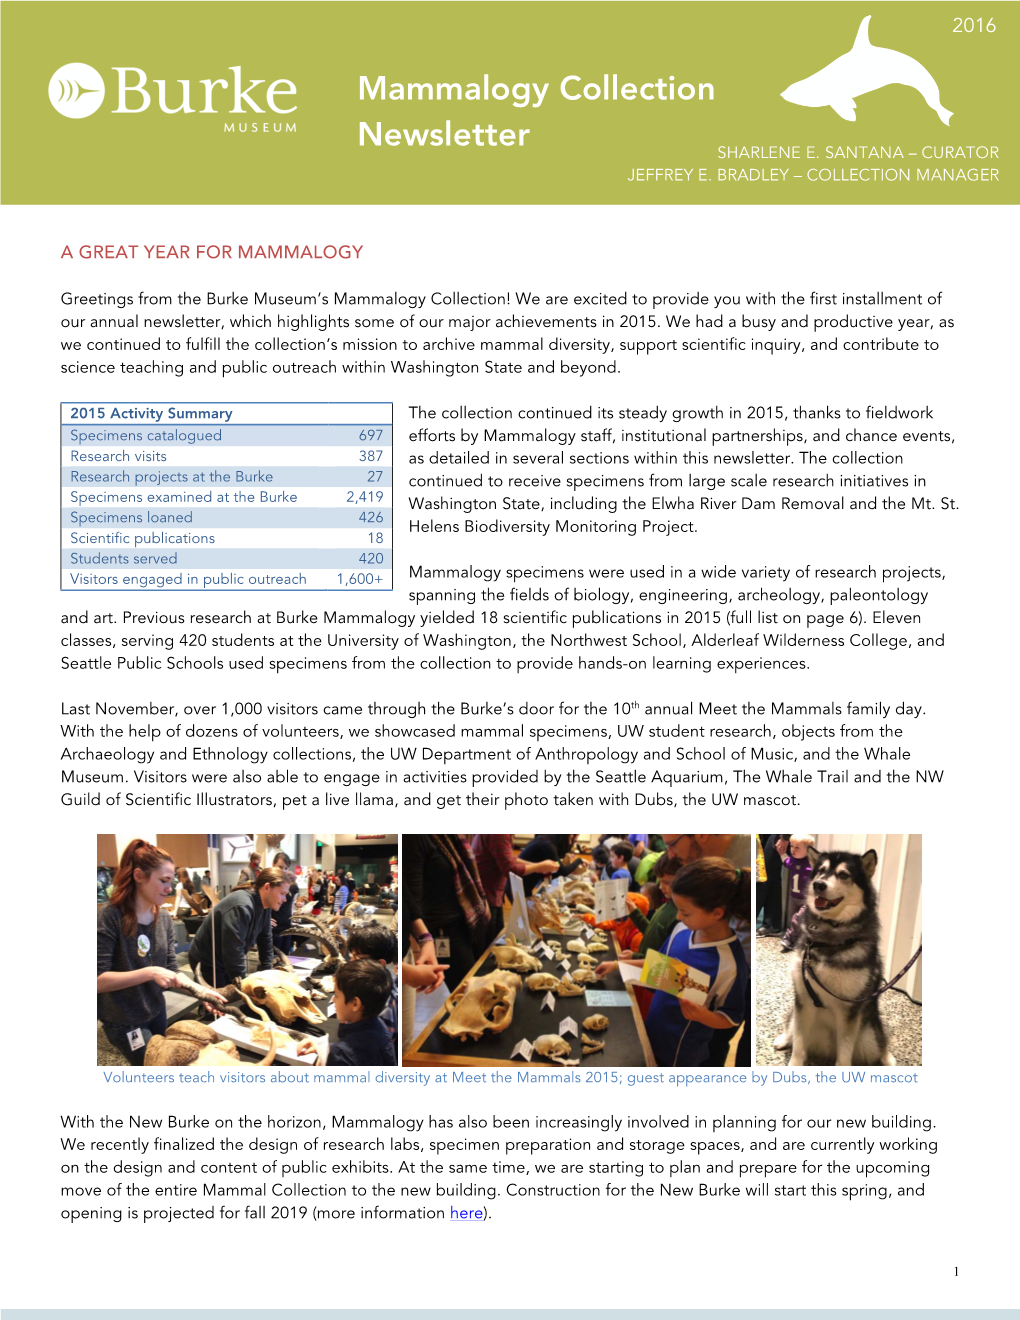 Mammalogy Newsletter 3.30.16